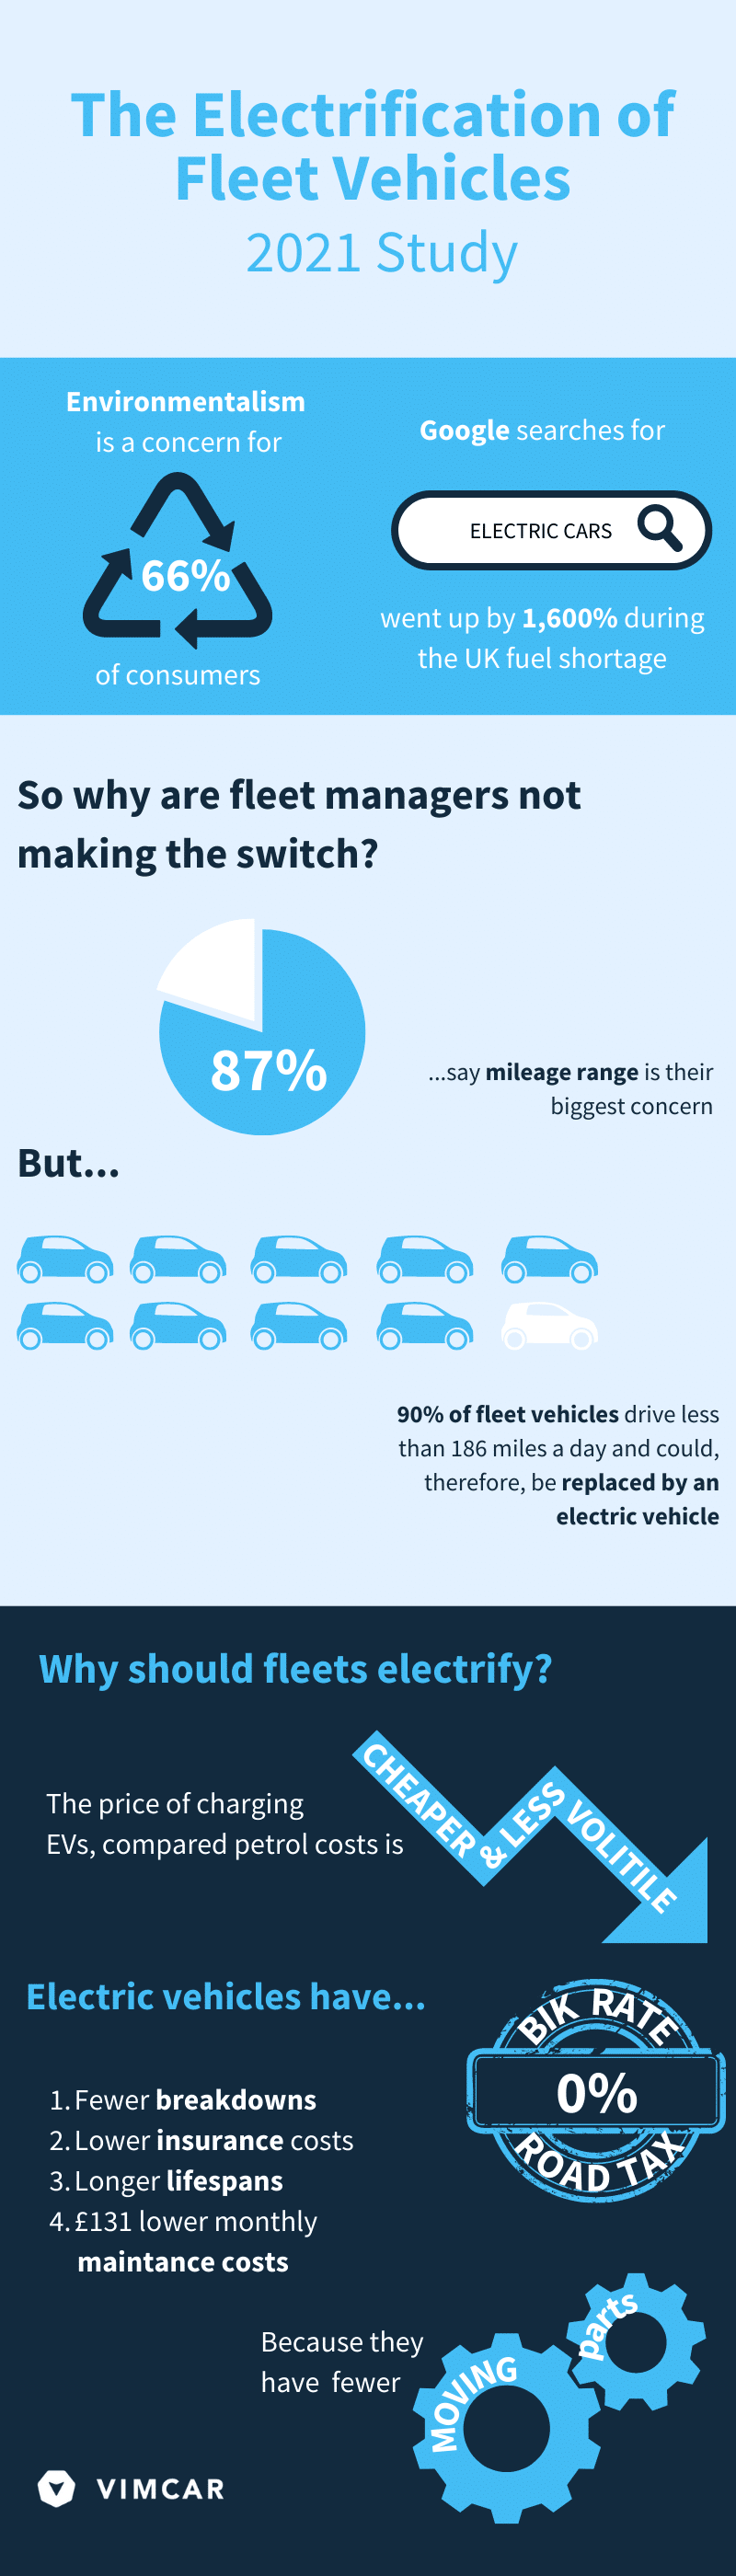 vimcar infographic electrification of fleet vehicles 2